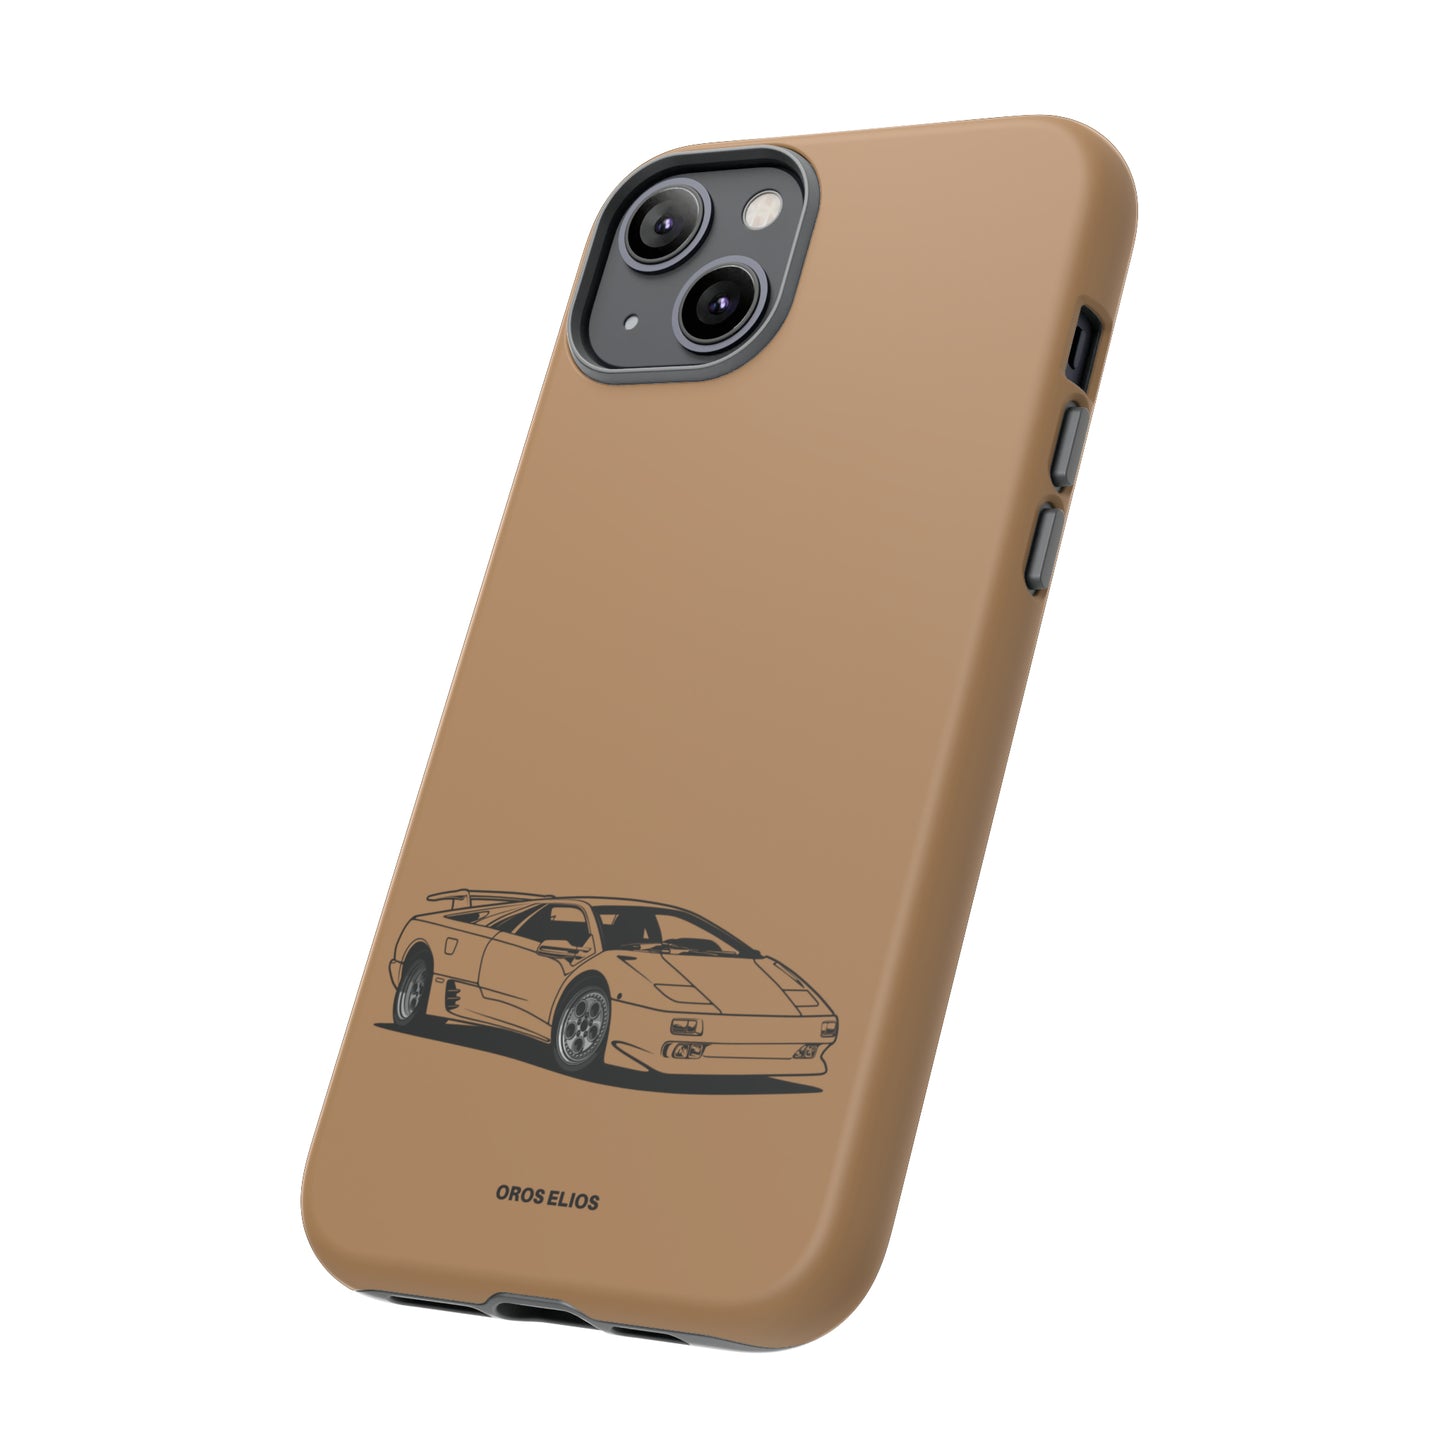 Oros Elios - Tough Case iPhone/Samsung/Pixel